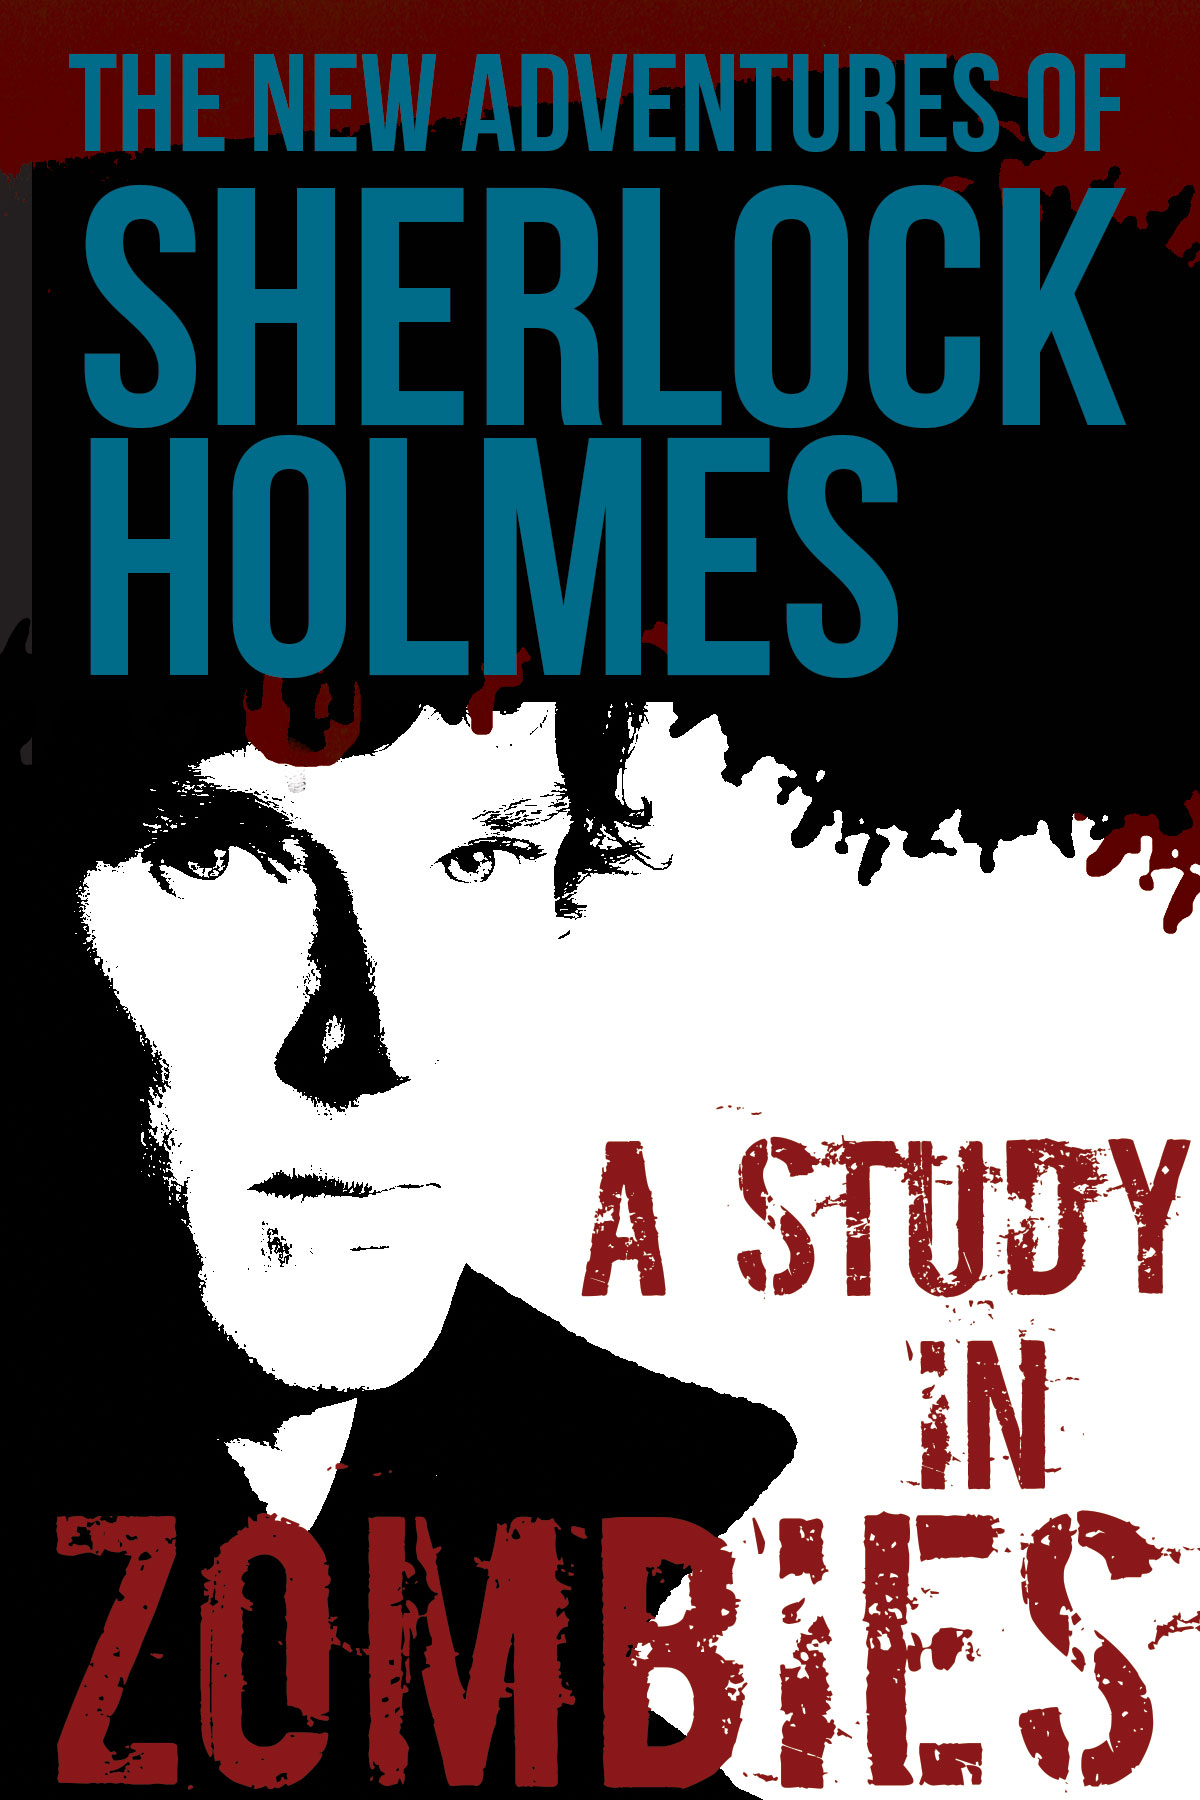 Sherlock Holmes mock book cover